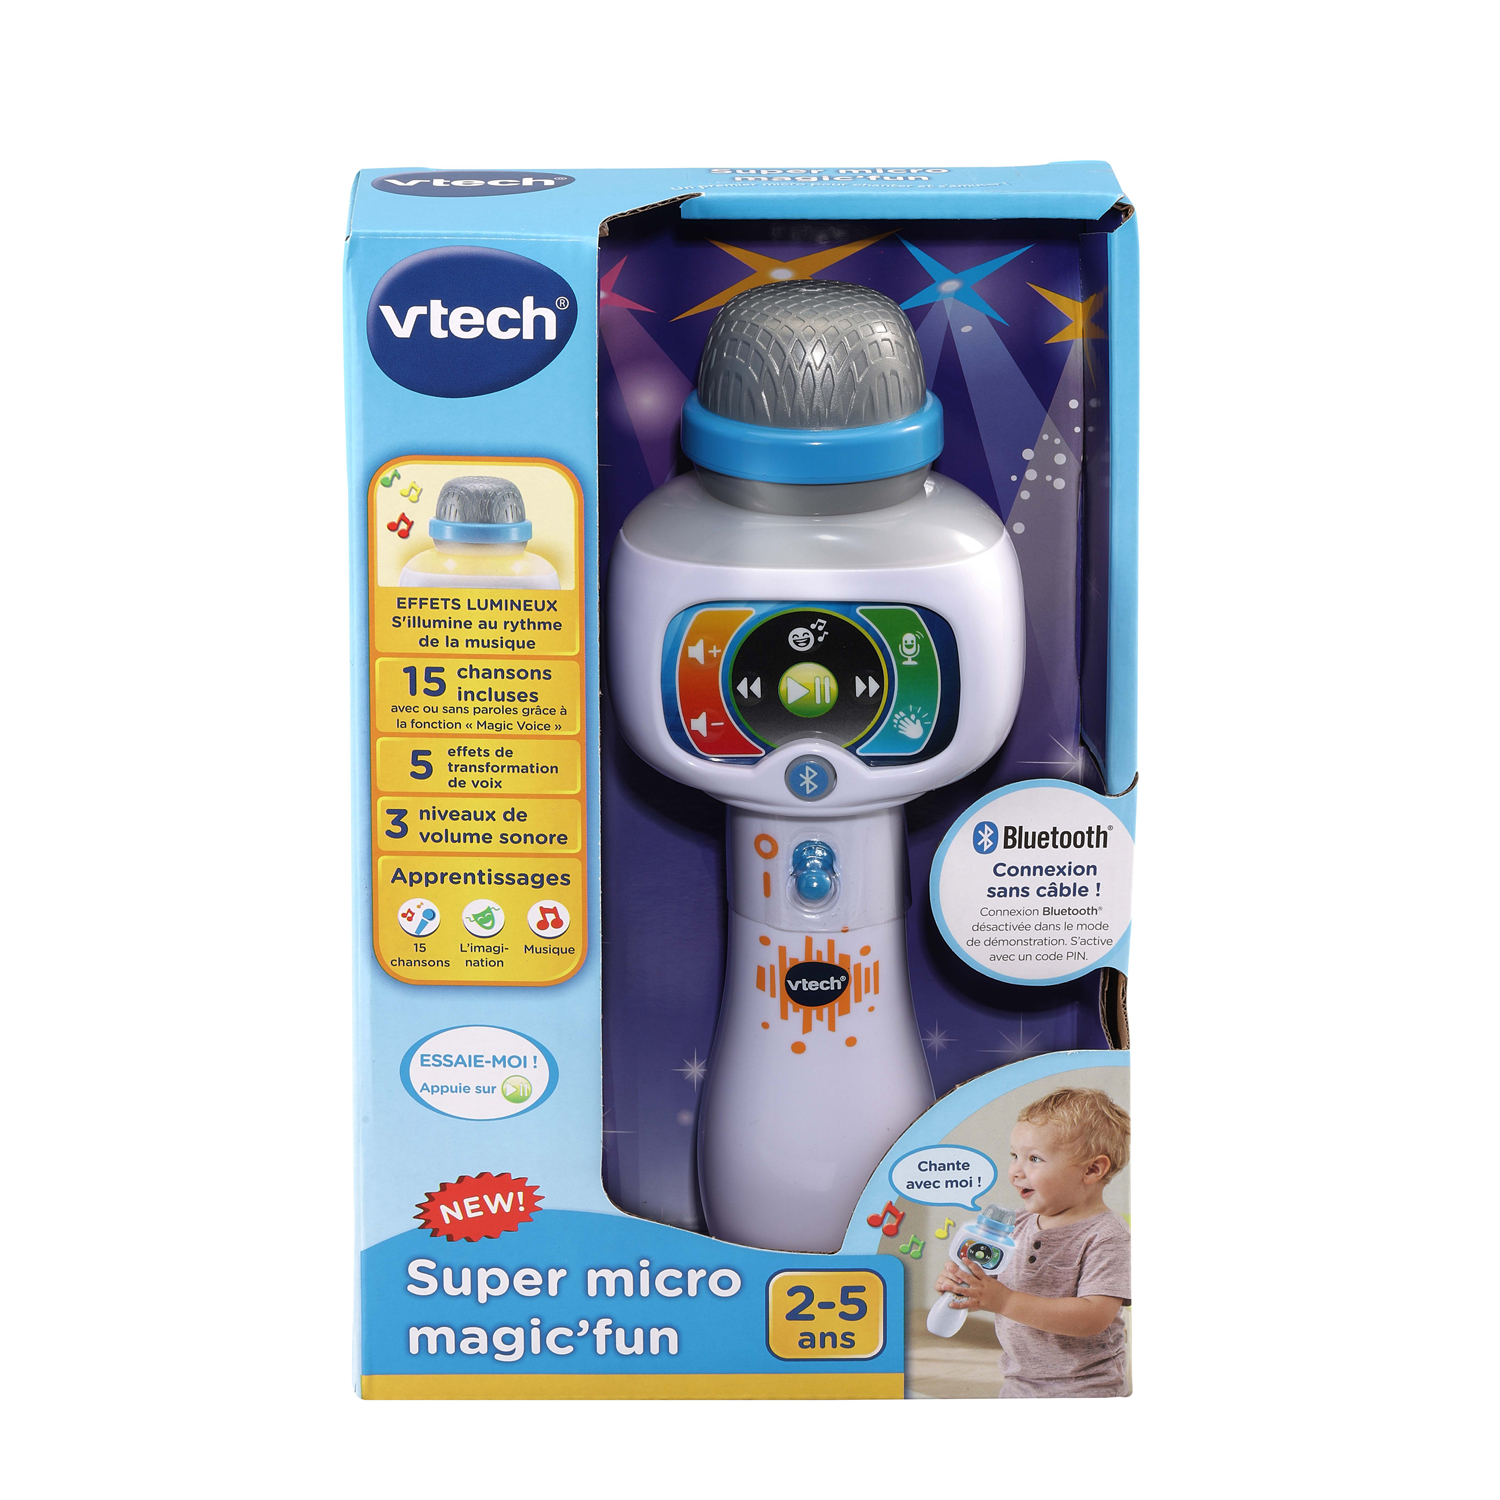 VTech - Super micro magic'fun, édition française